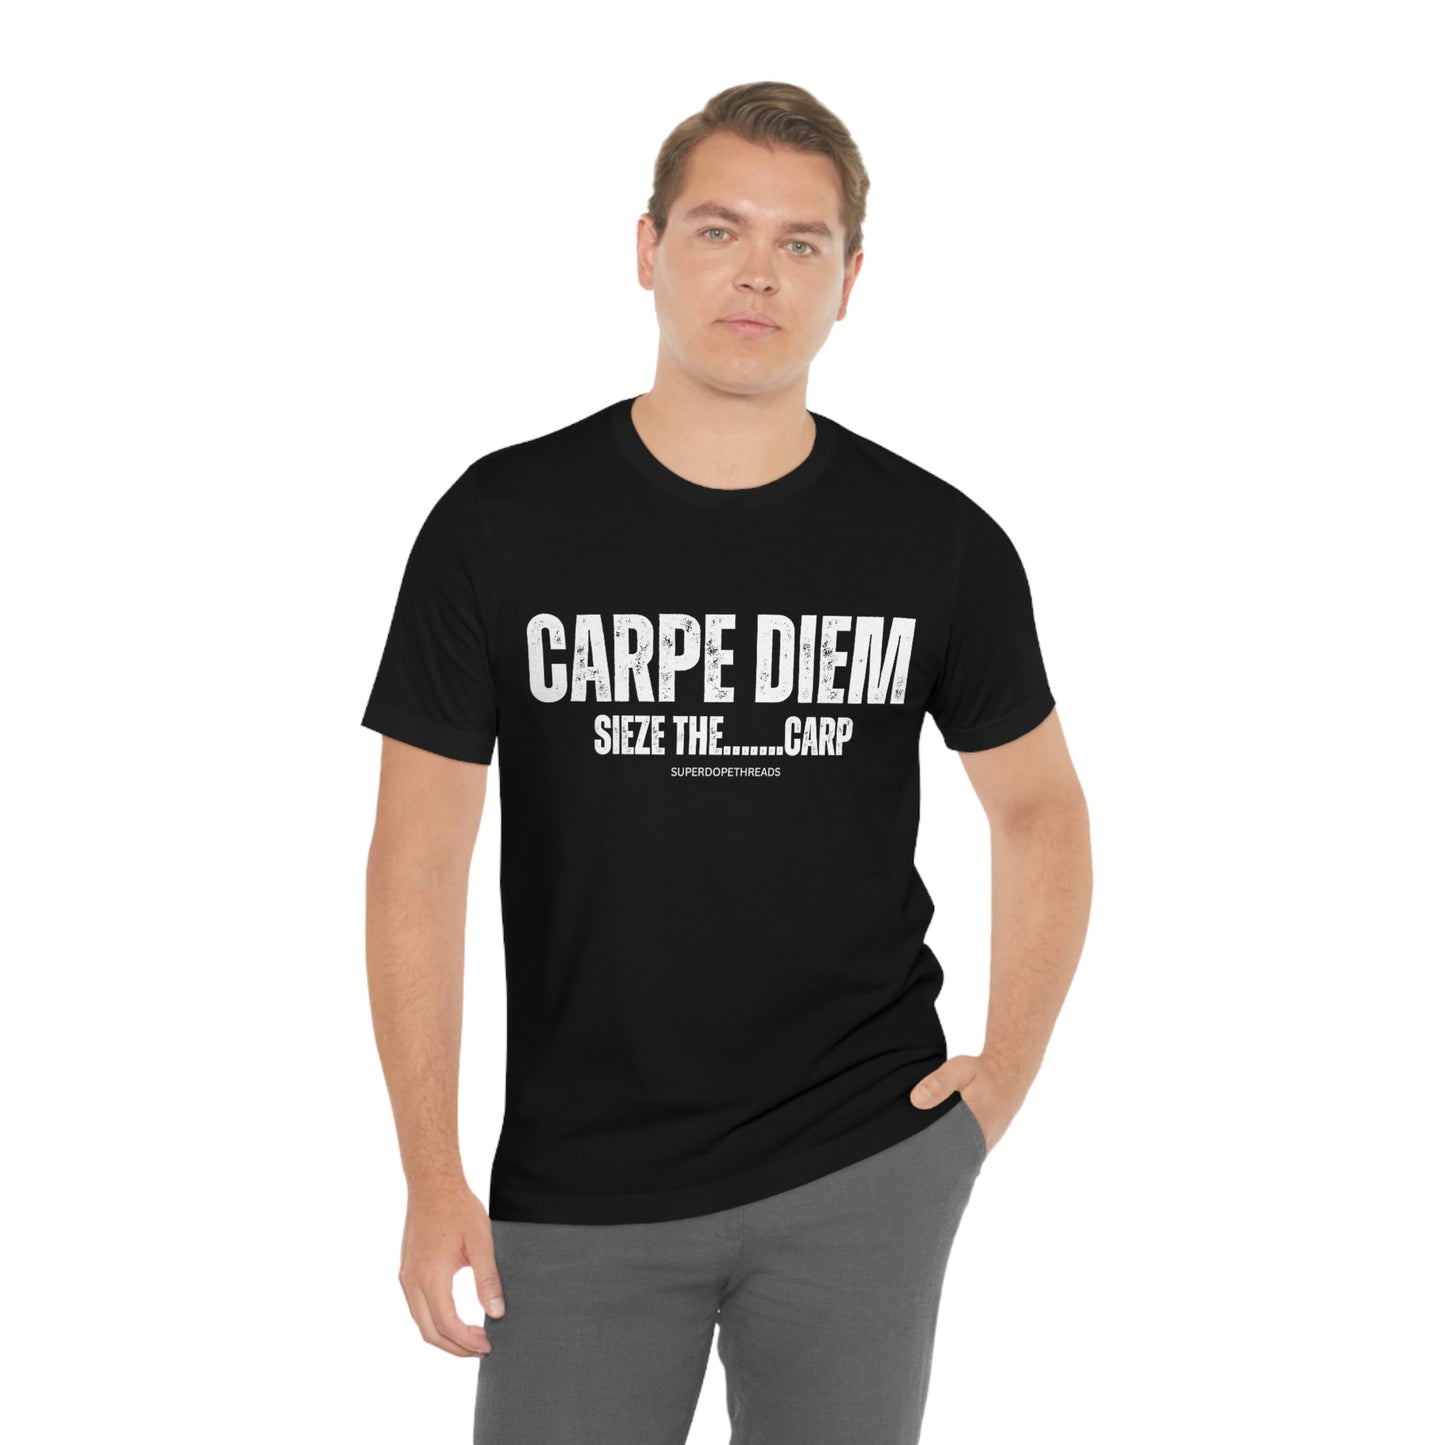 Super Dope Threads - Carpe Diem